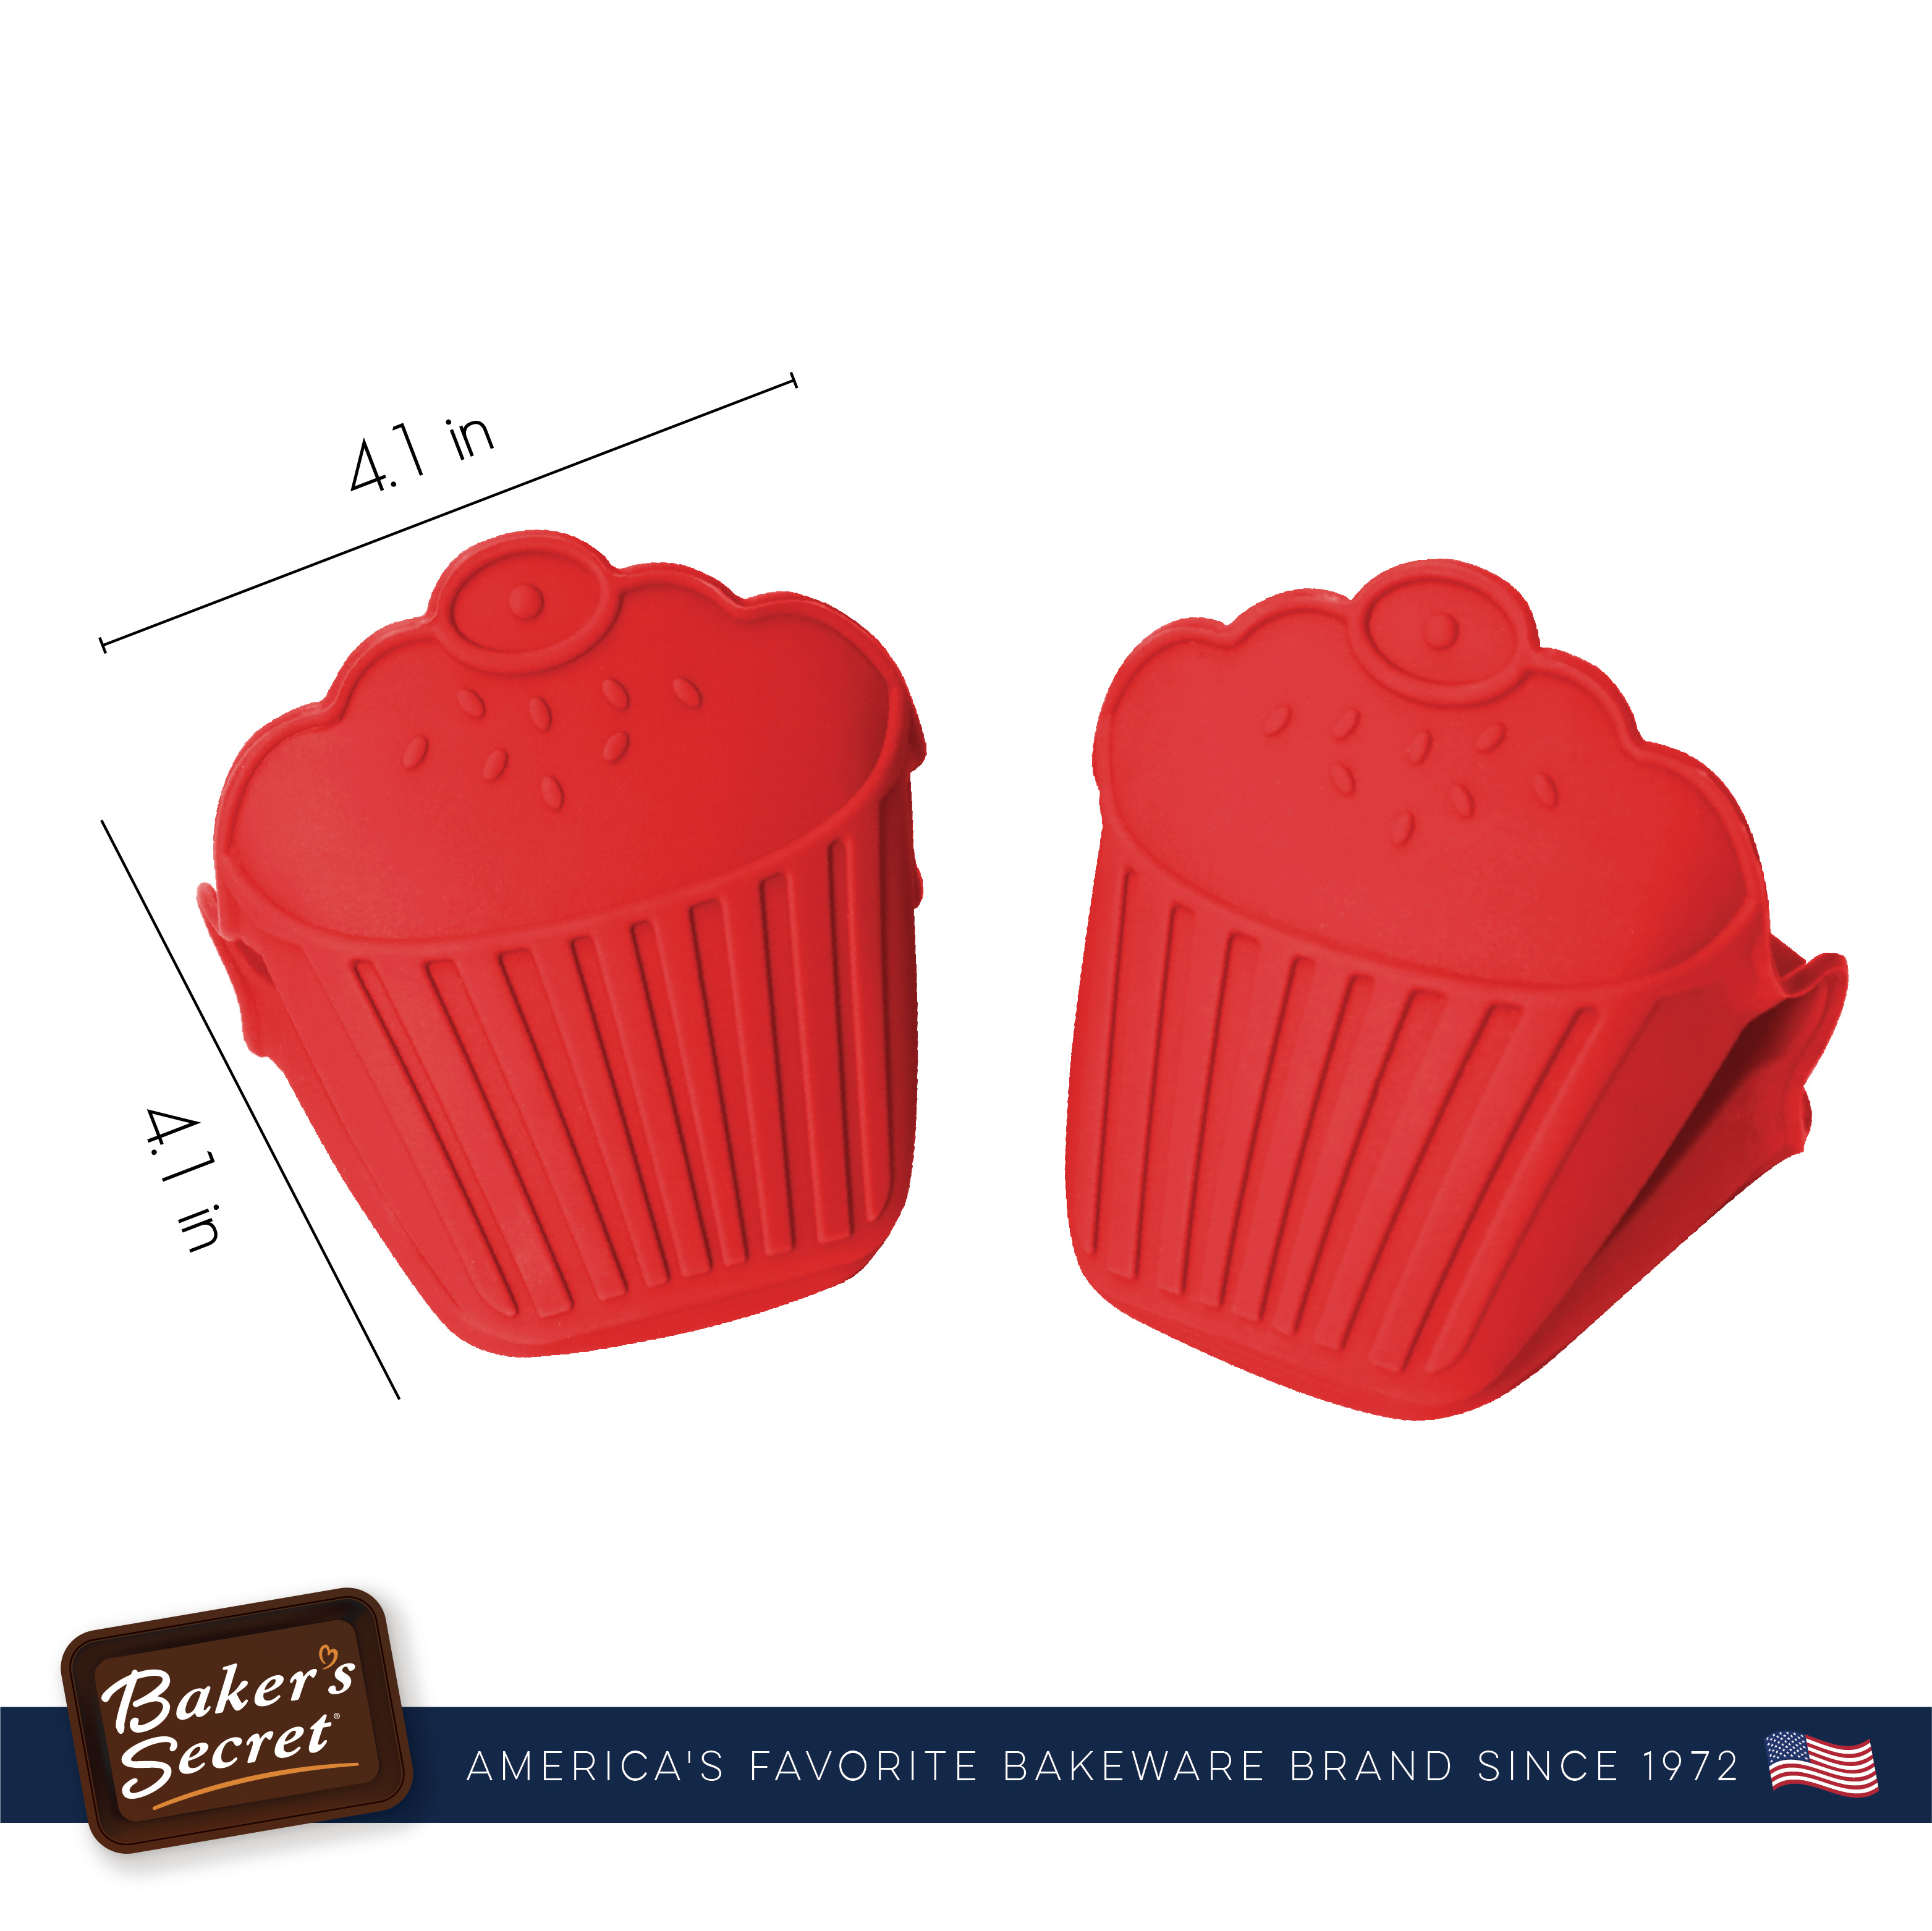 Clayre & Eef Kids' Oven Mitt 12x21 cm Red Pink Cotton Cupcakes